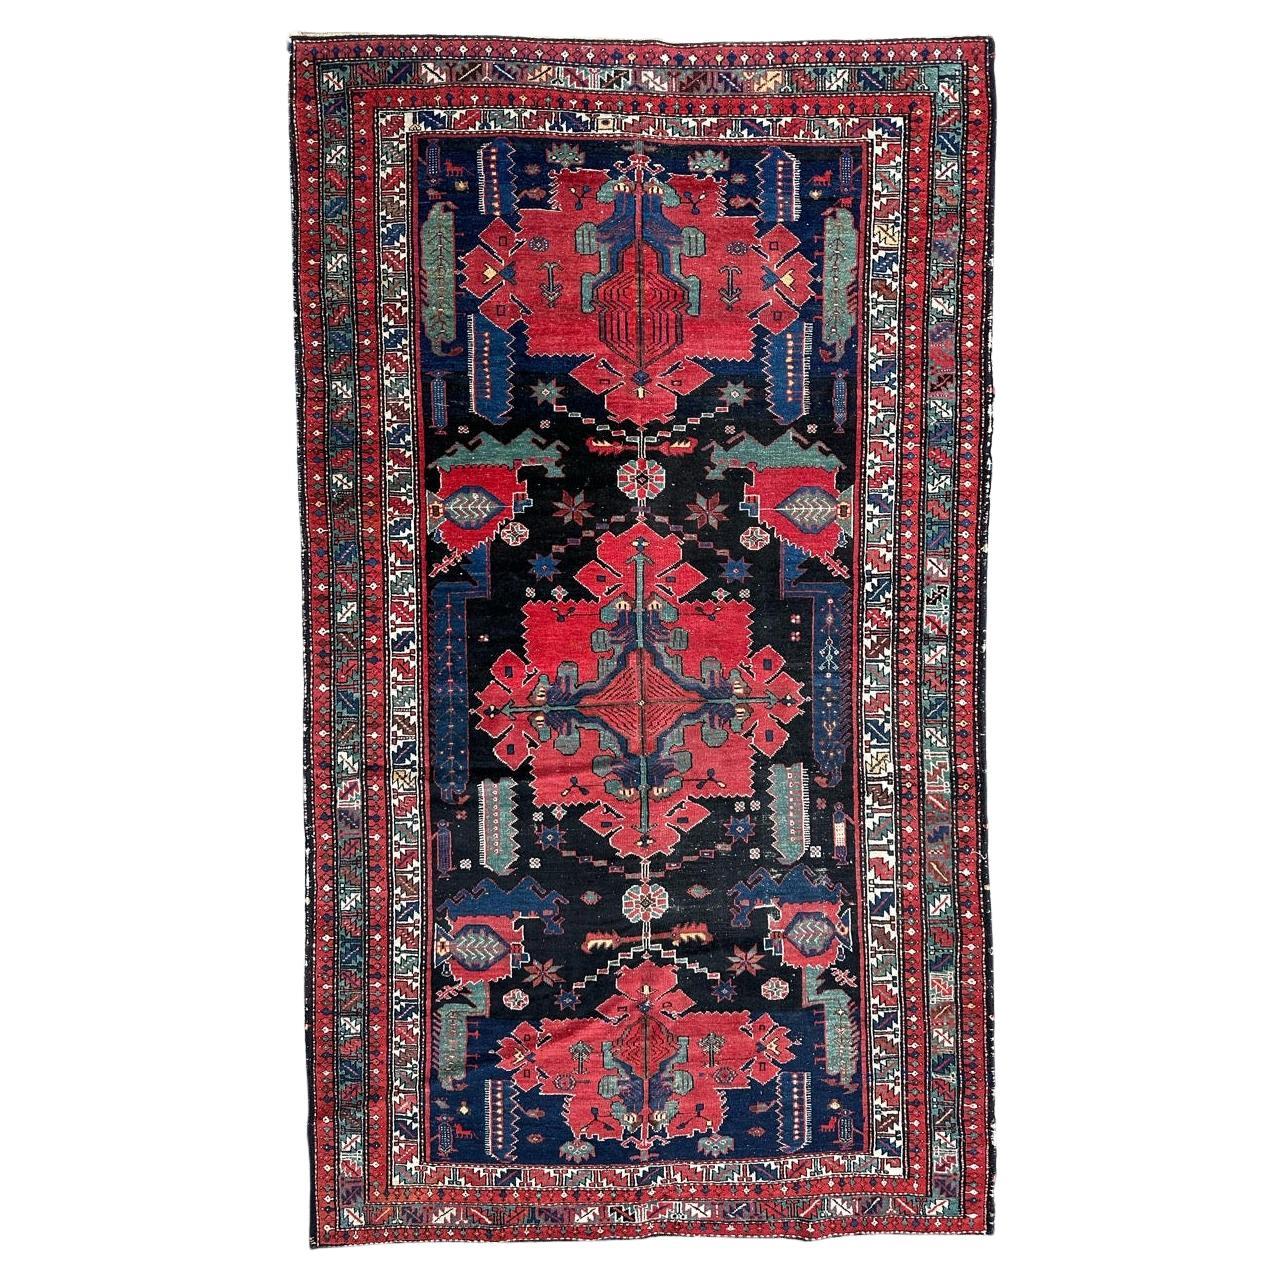 Bobyrug’s Very beautiful antique fine Hamadan rug 